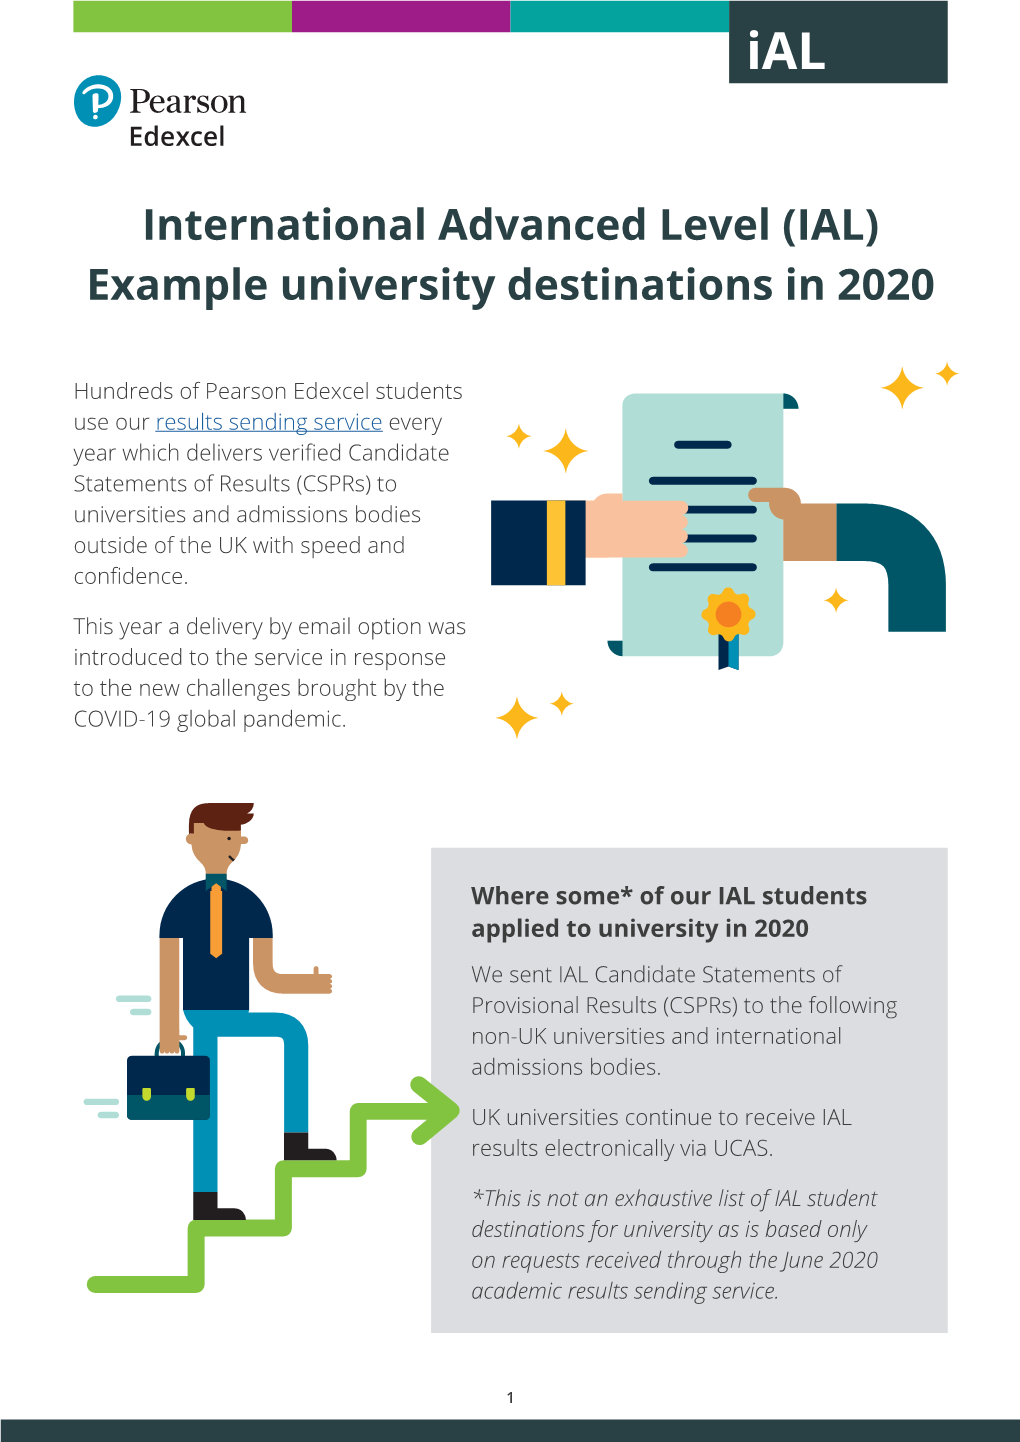 International Advanced Level (IAL) Example University Destinations in 2020